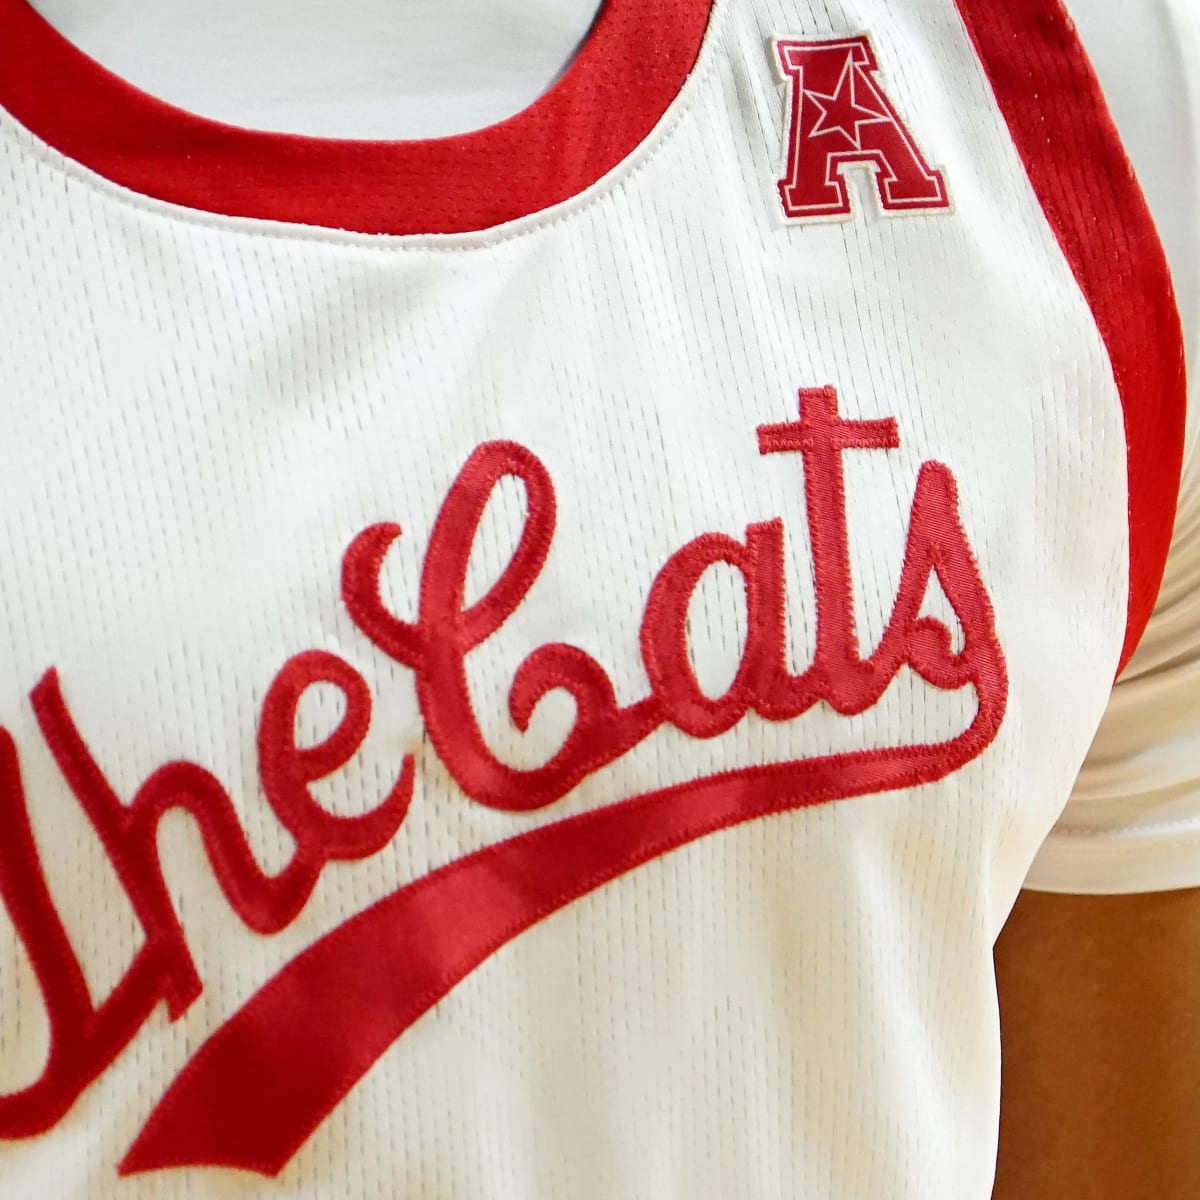 Cincinnati athletics reveals new red uniform line